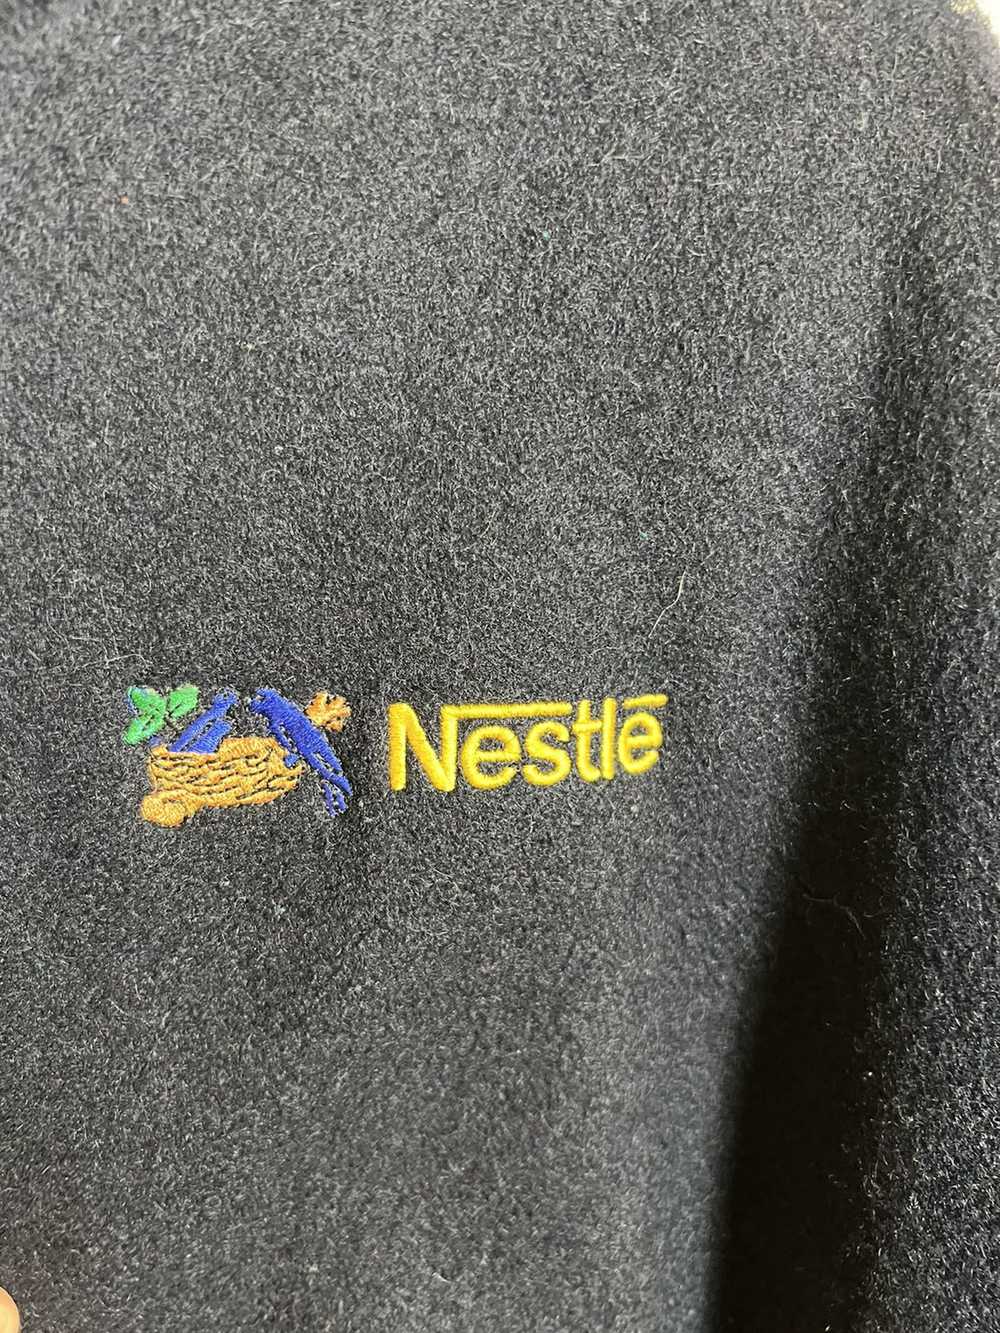 Vintage Vintage Nestle Jacket - image 4